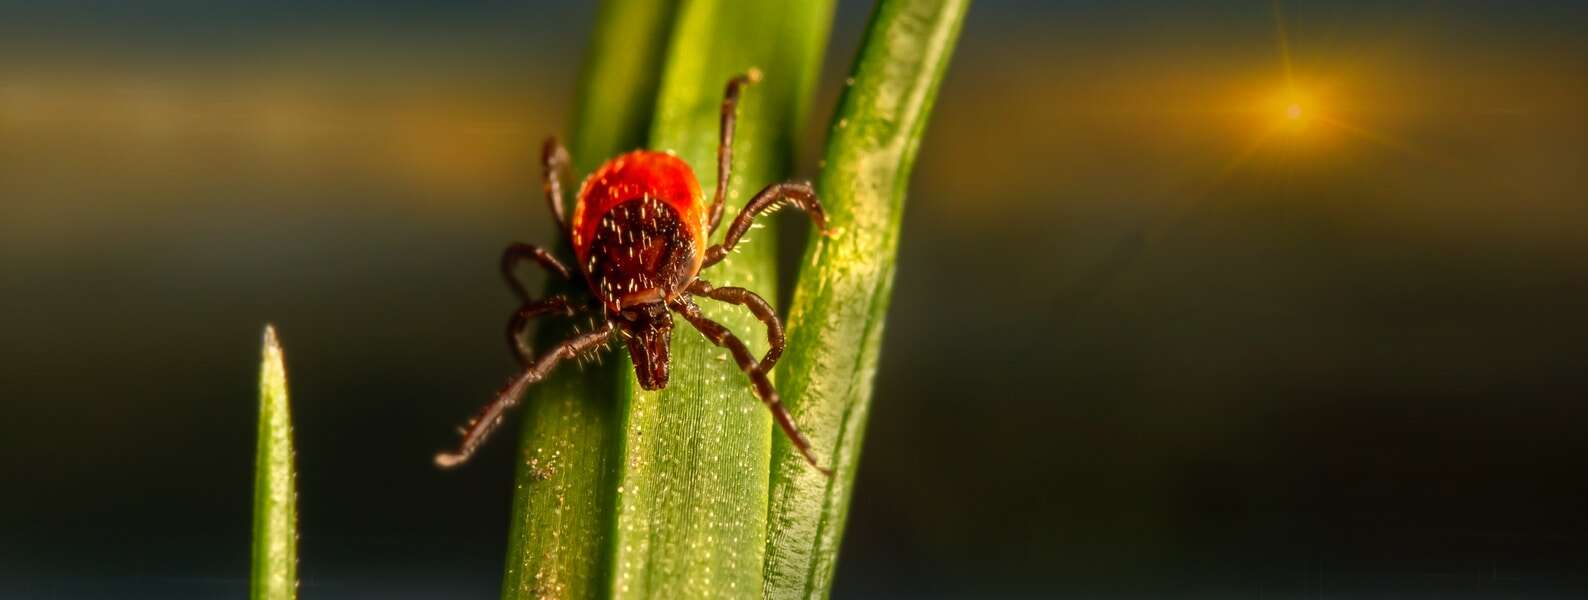 a red blacklegged tick crawls on a blade of grass